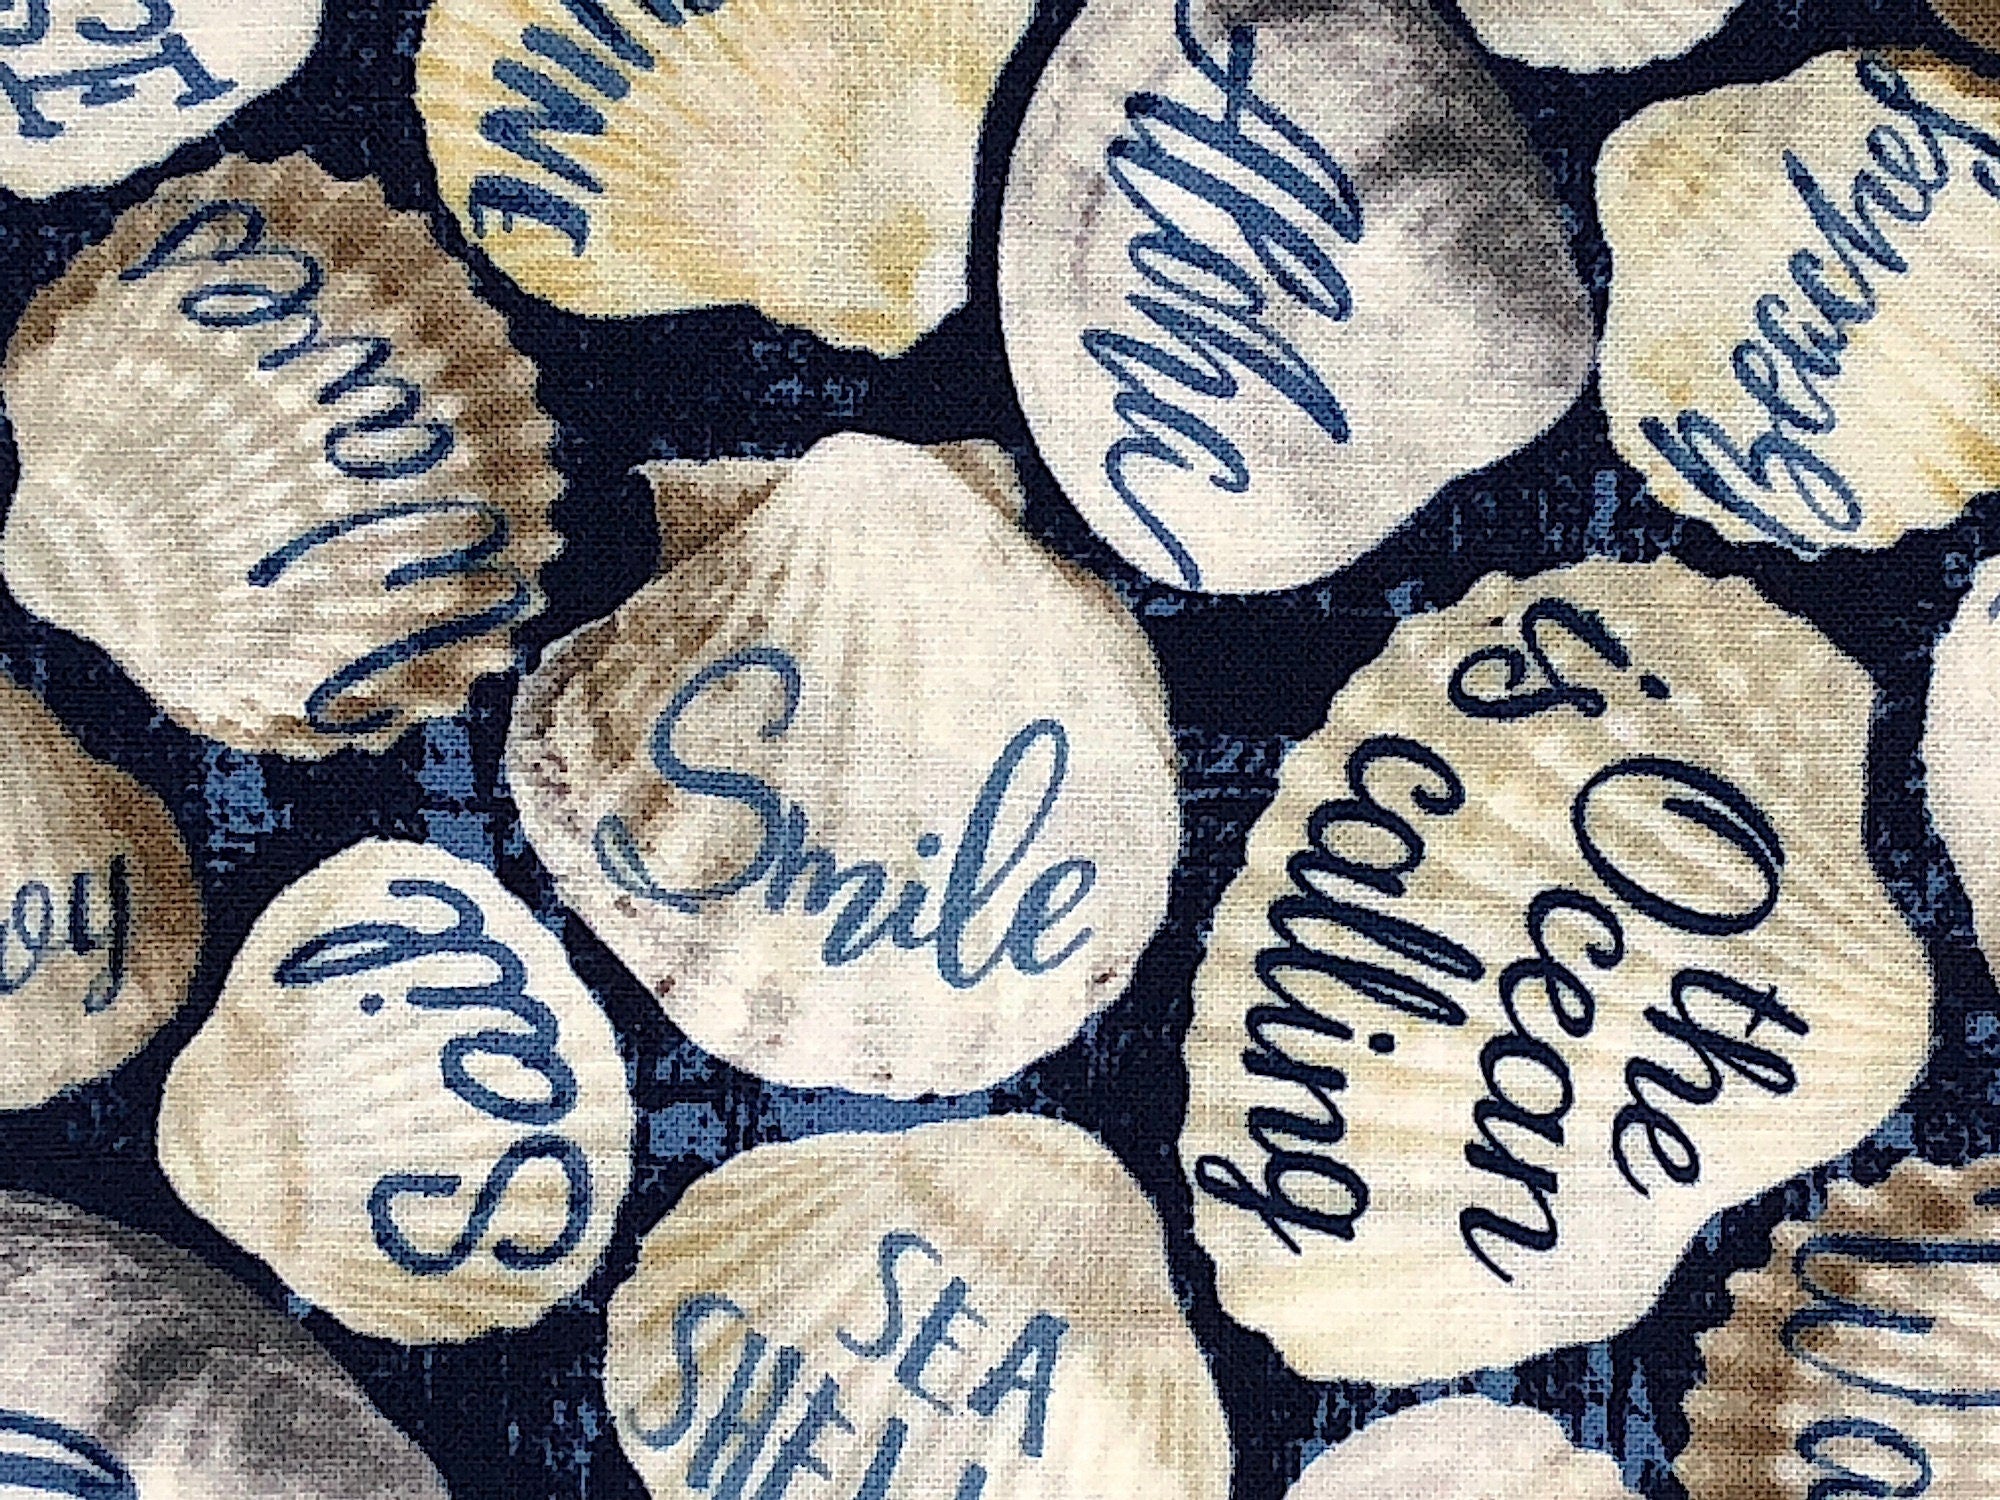 Seashell Fabric - Words on Seashells - Cotton Fabric - Quilting Fabric - Timeless Treasures - NAU-88